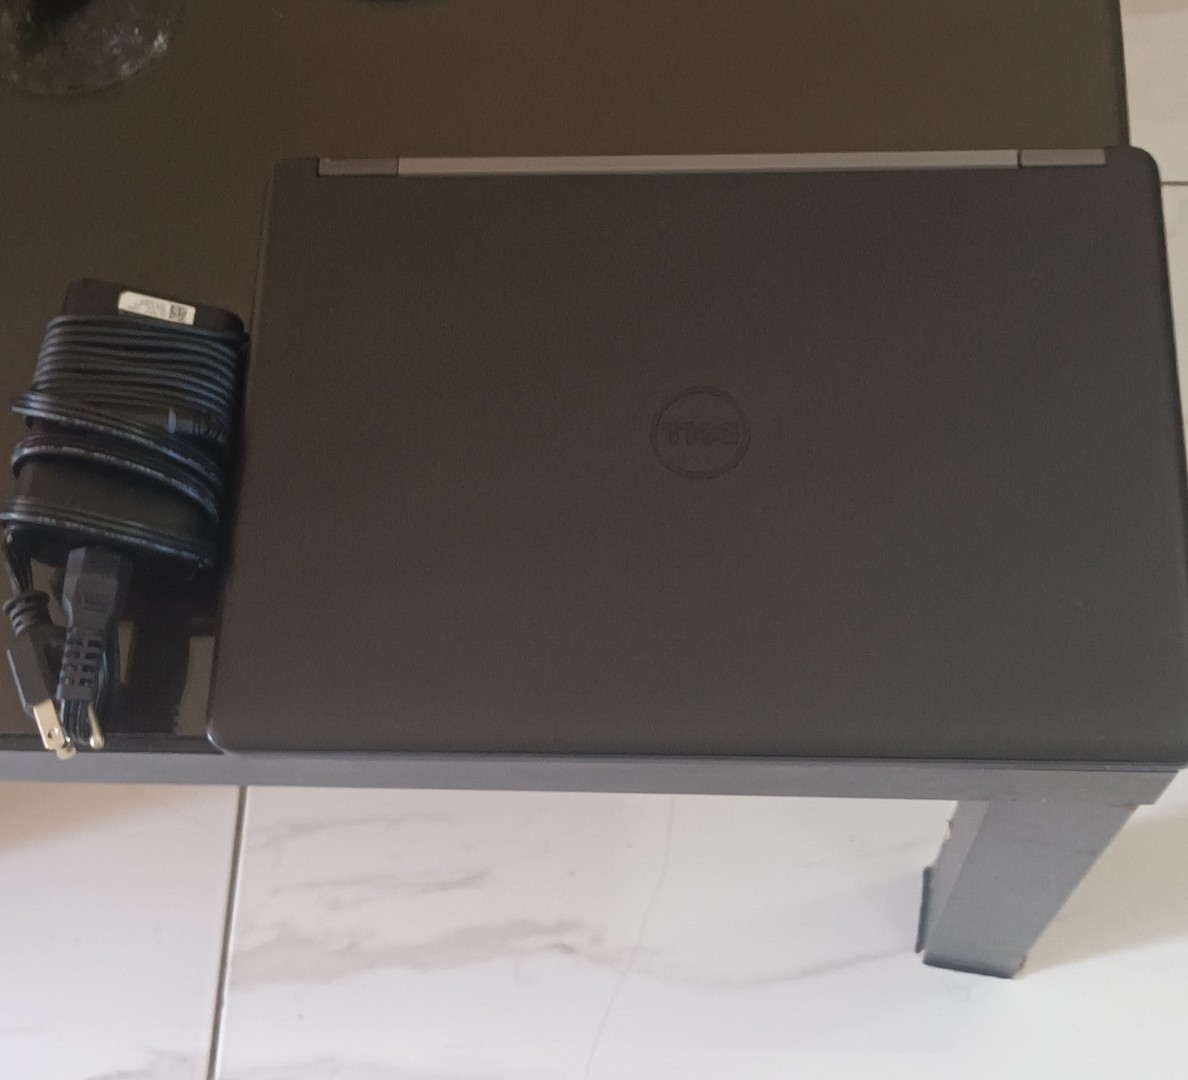 computadoras y laptops - Laptop Dell E5450 i7 500GB SSD 12GB RAM Nvidia Geforce Win 10
